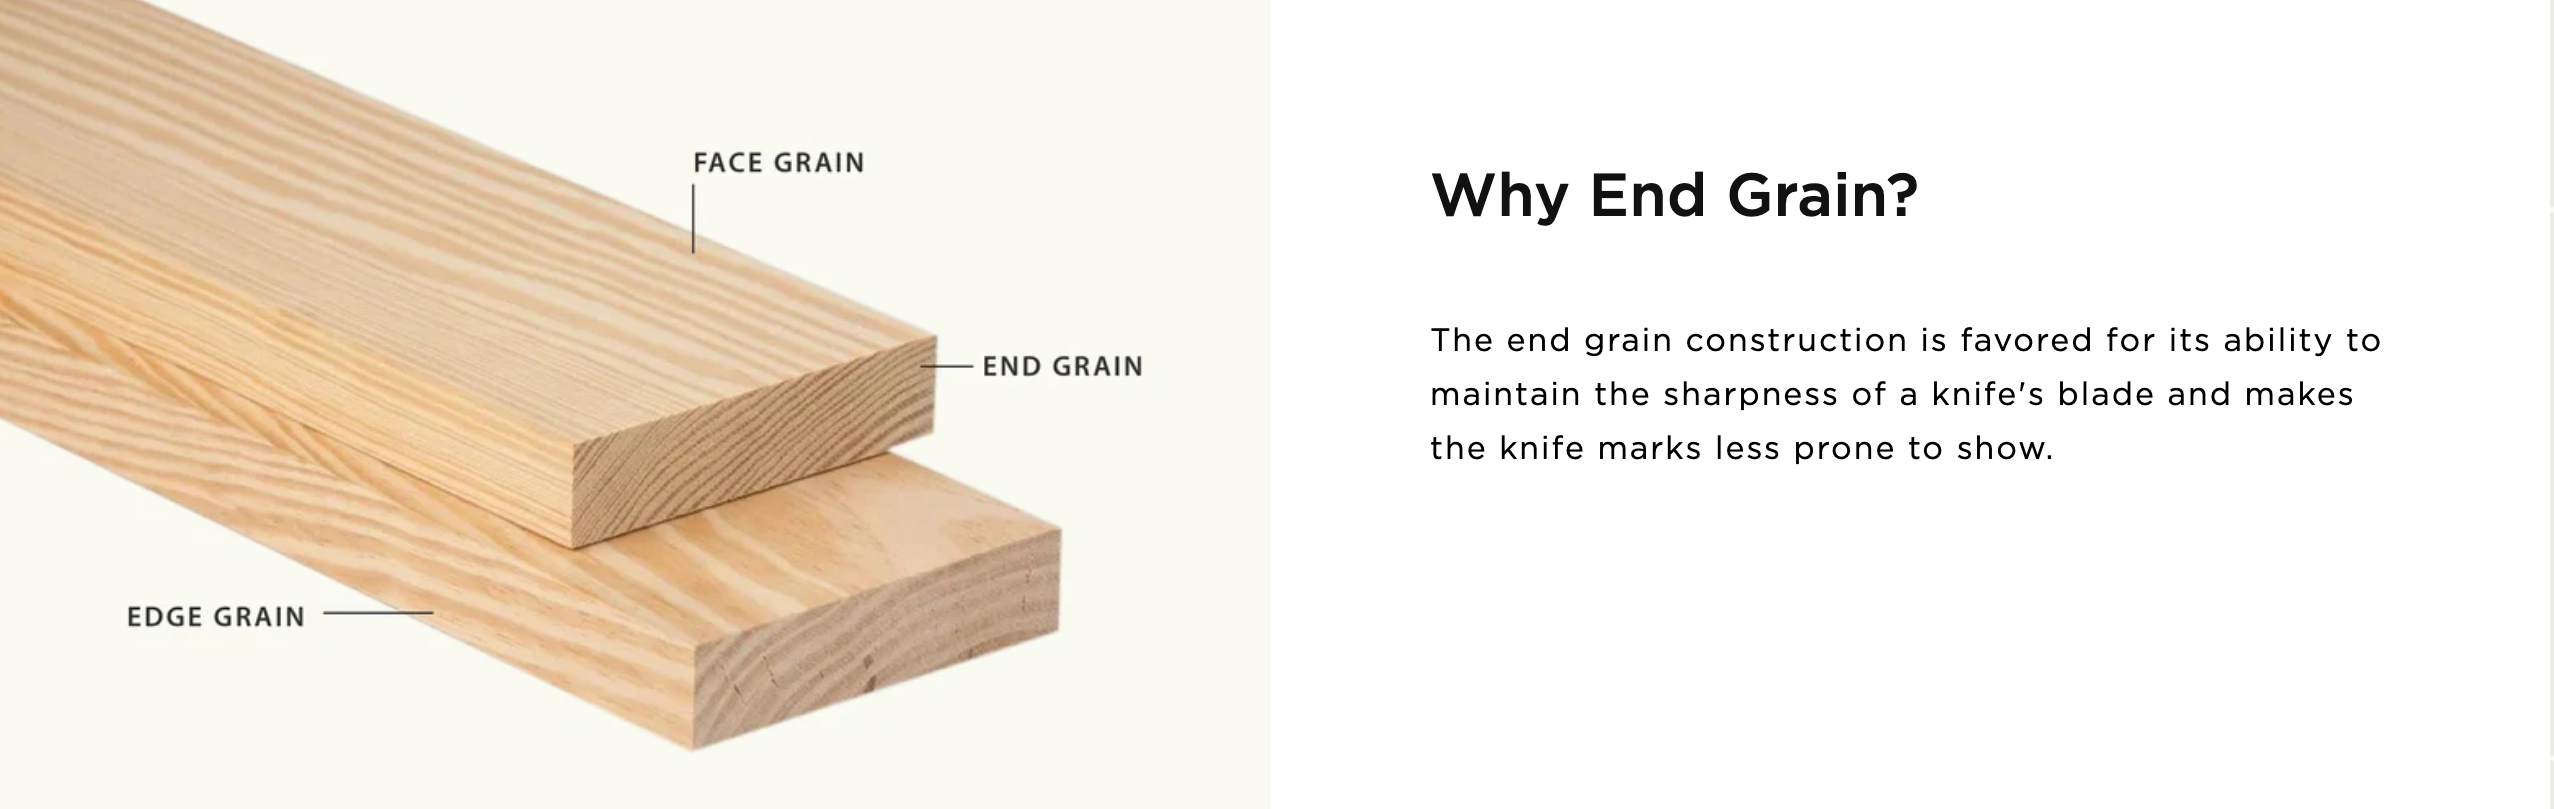 JK Adams Professional End Grain Maple Board, Round, Multiple Sizes